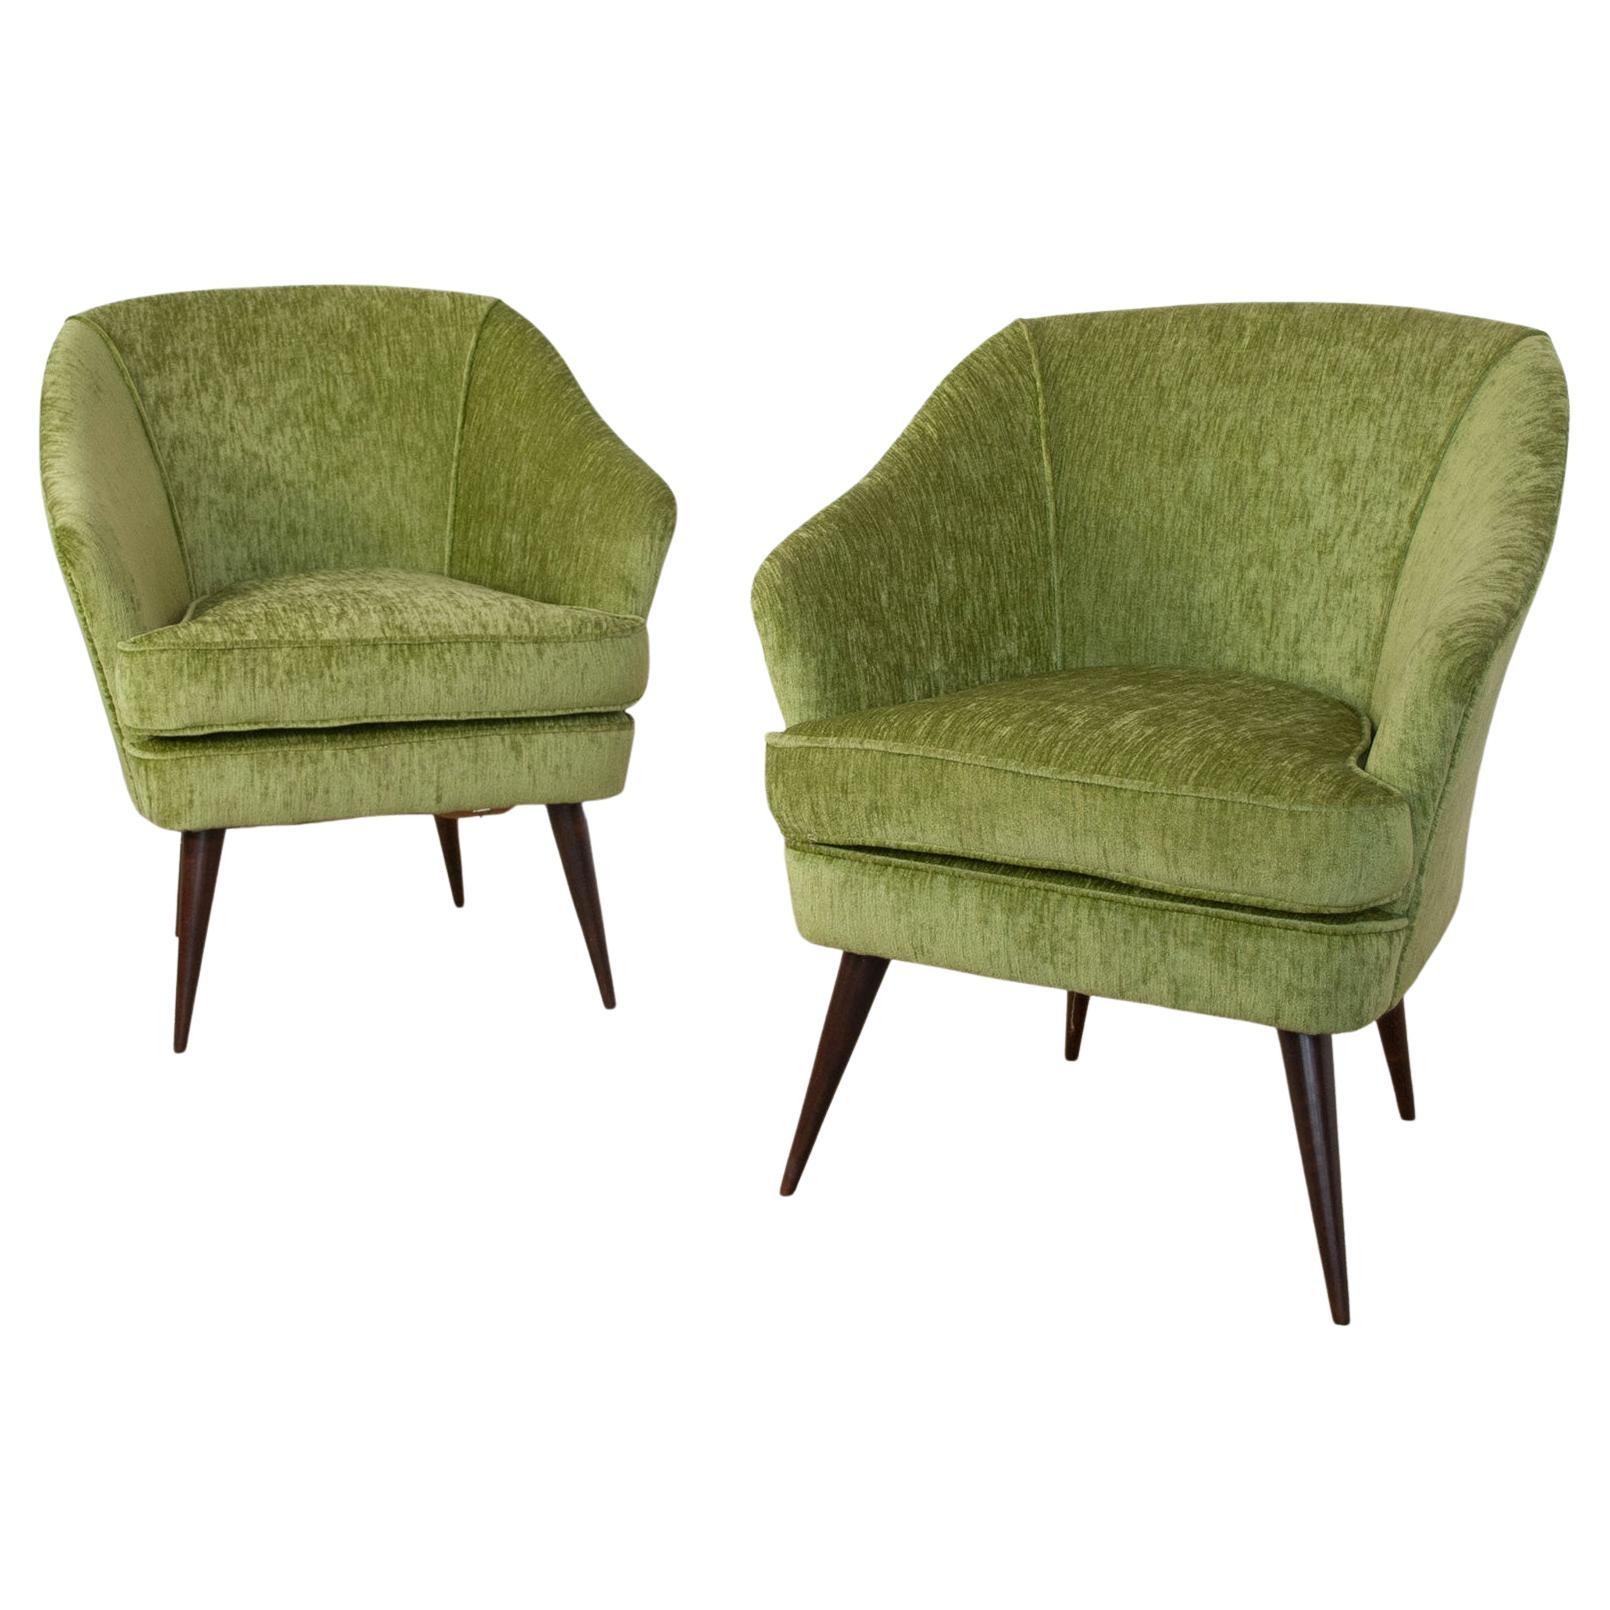 Set of two armchairs manufactured by Casa e Giardino designer Gio Ponti 1940 . For Sale